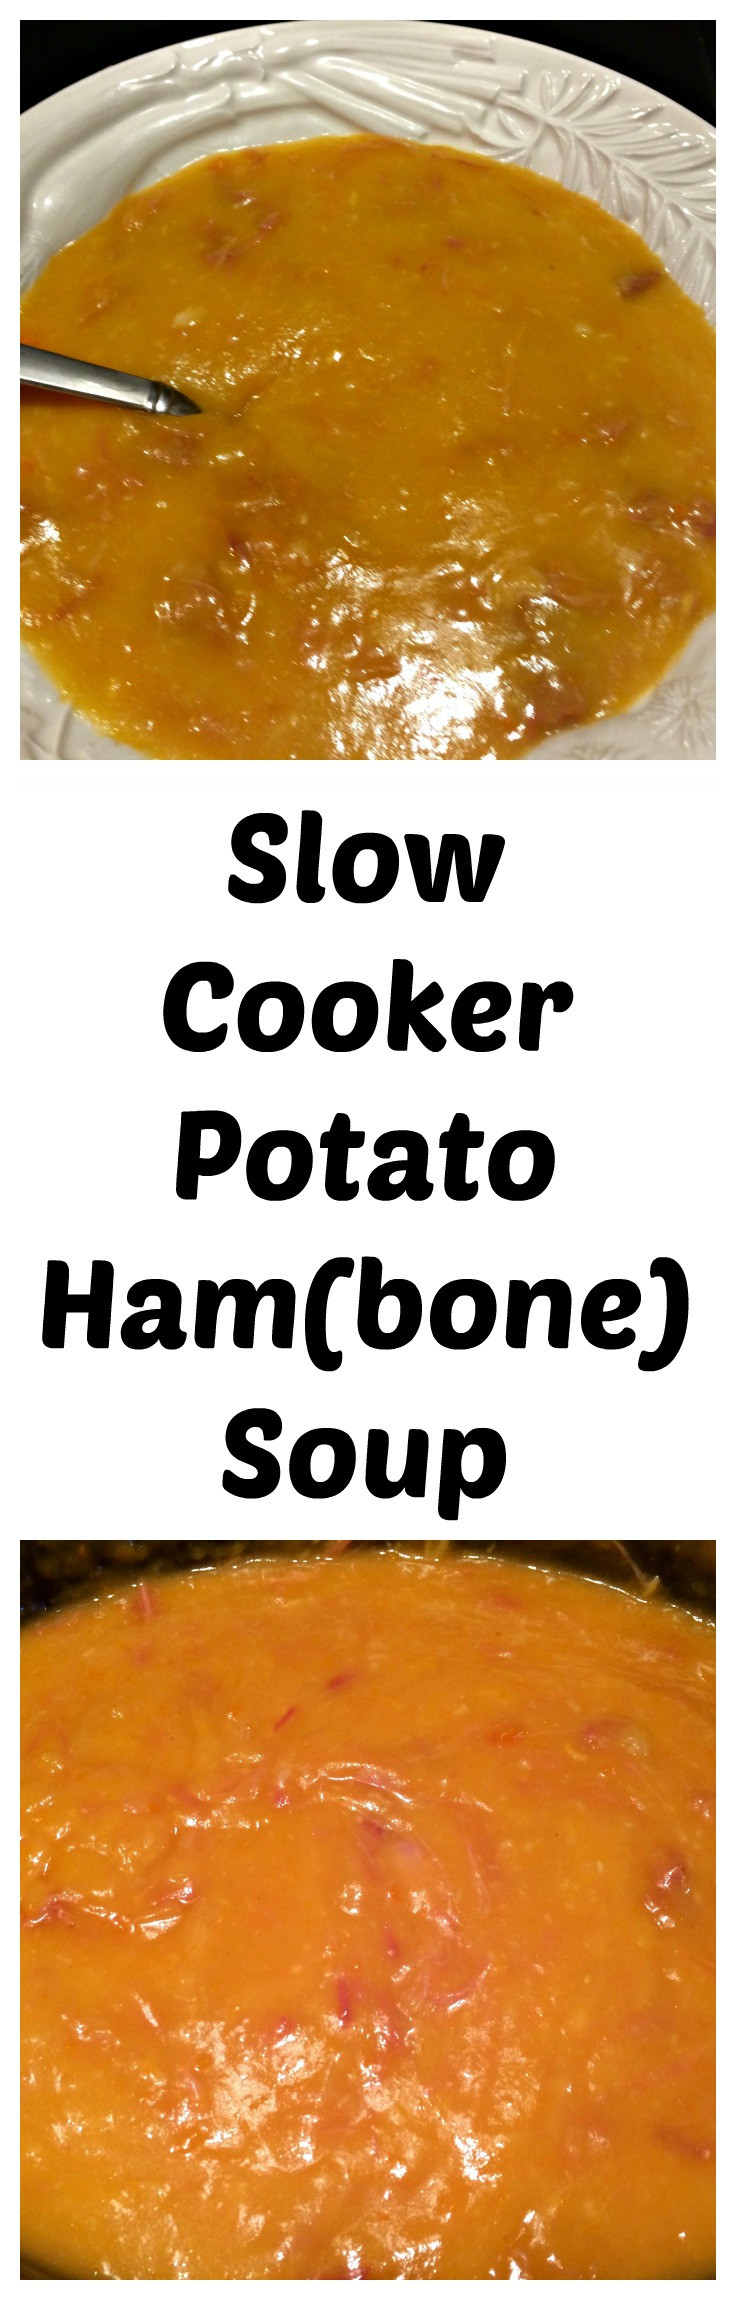 Ham Bone Potato Soup Slow Cooker
 Slow Cooker Potato Ham bone Soup Sweet Mornings